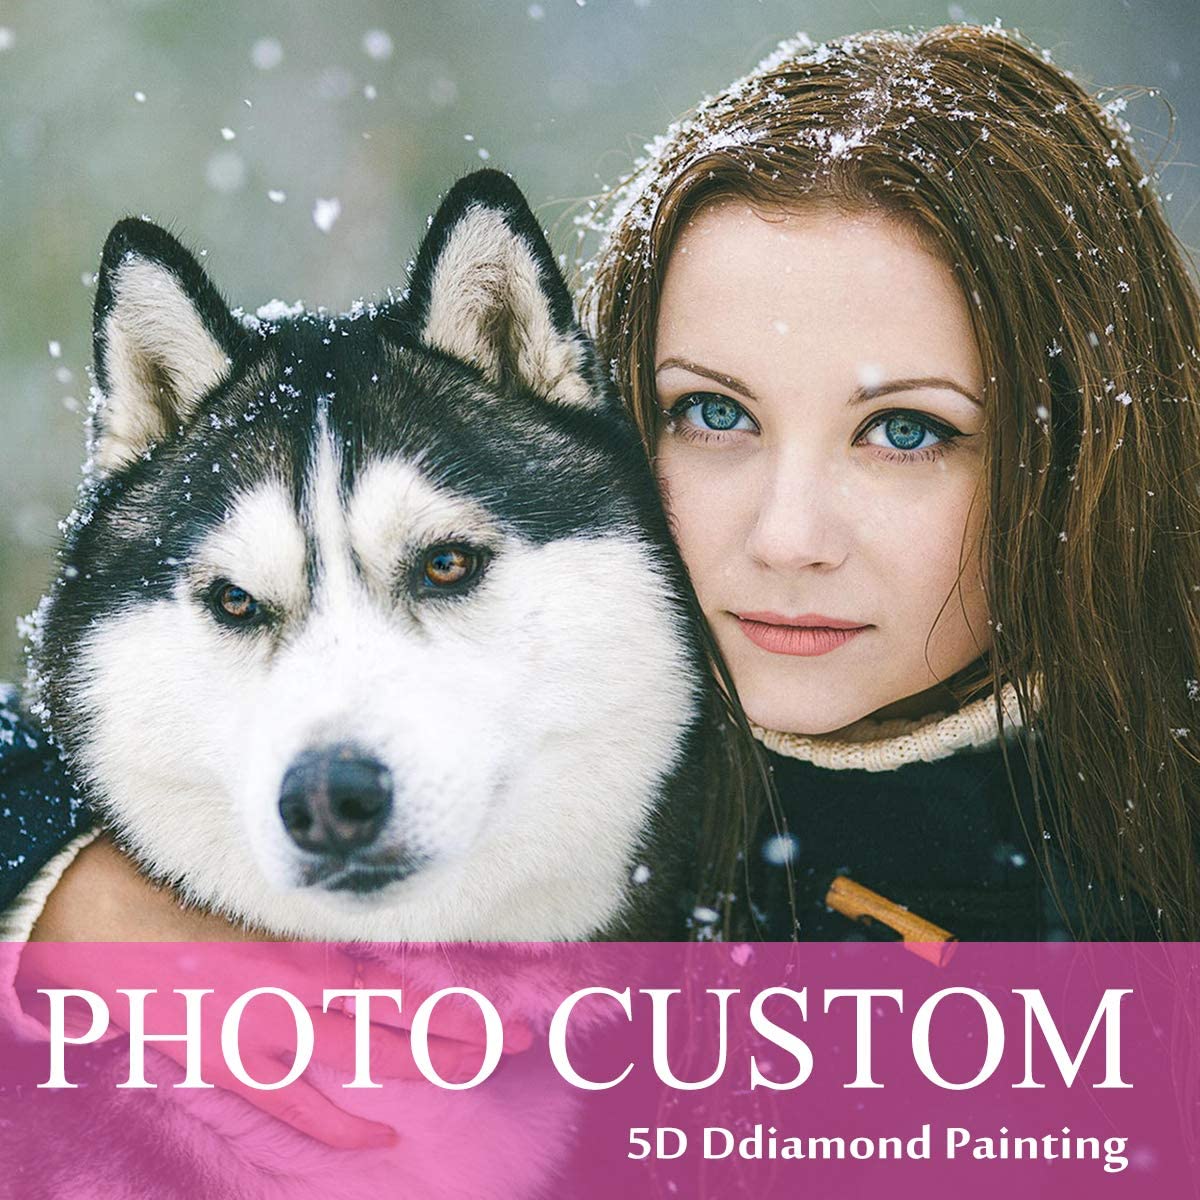 Custom 5D Diamond Painting - Make Your Own Photo